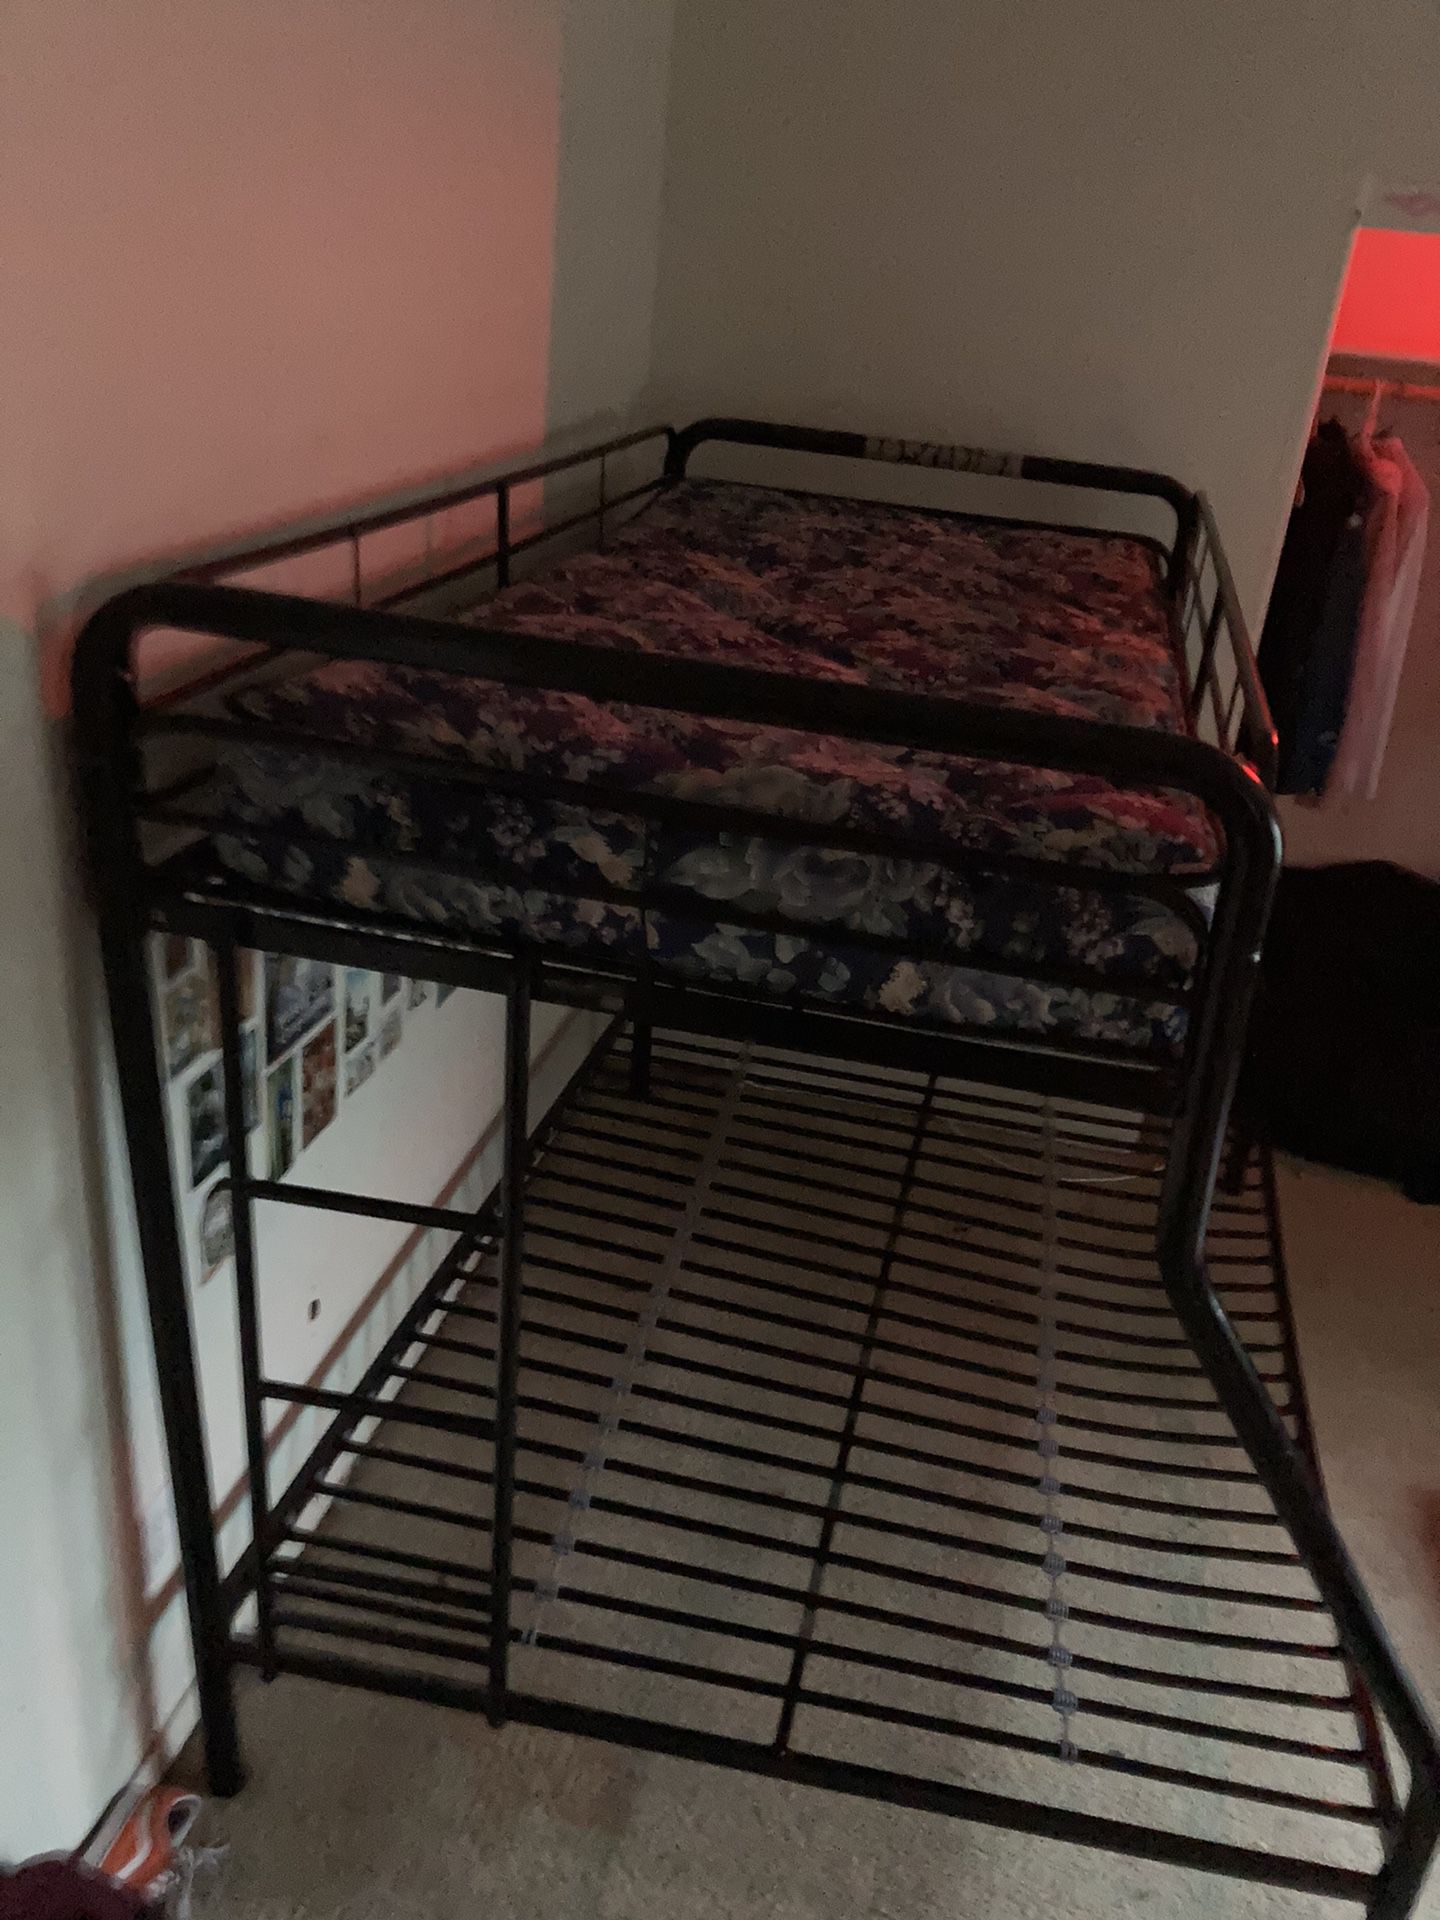 Black Metal Bunk Bed